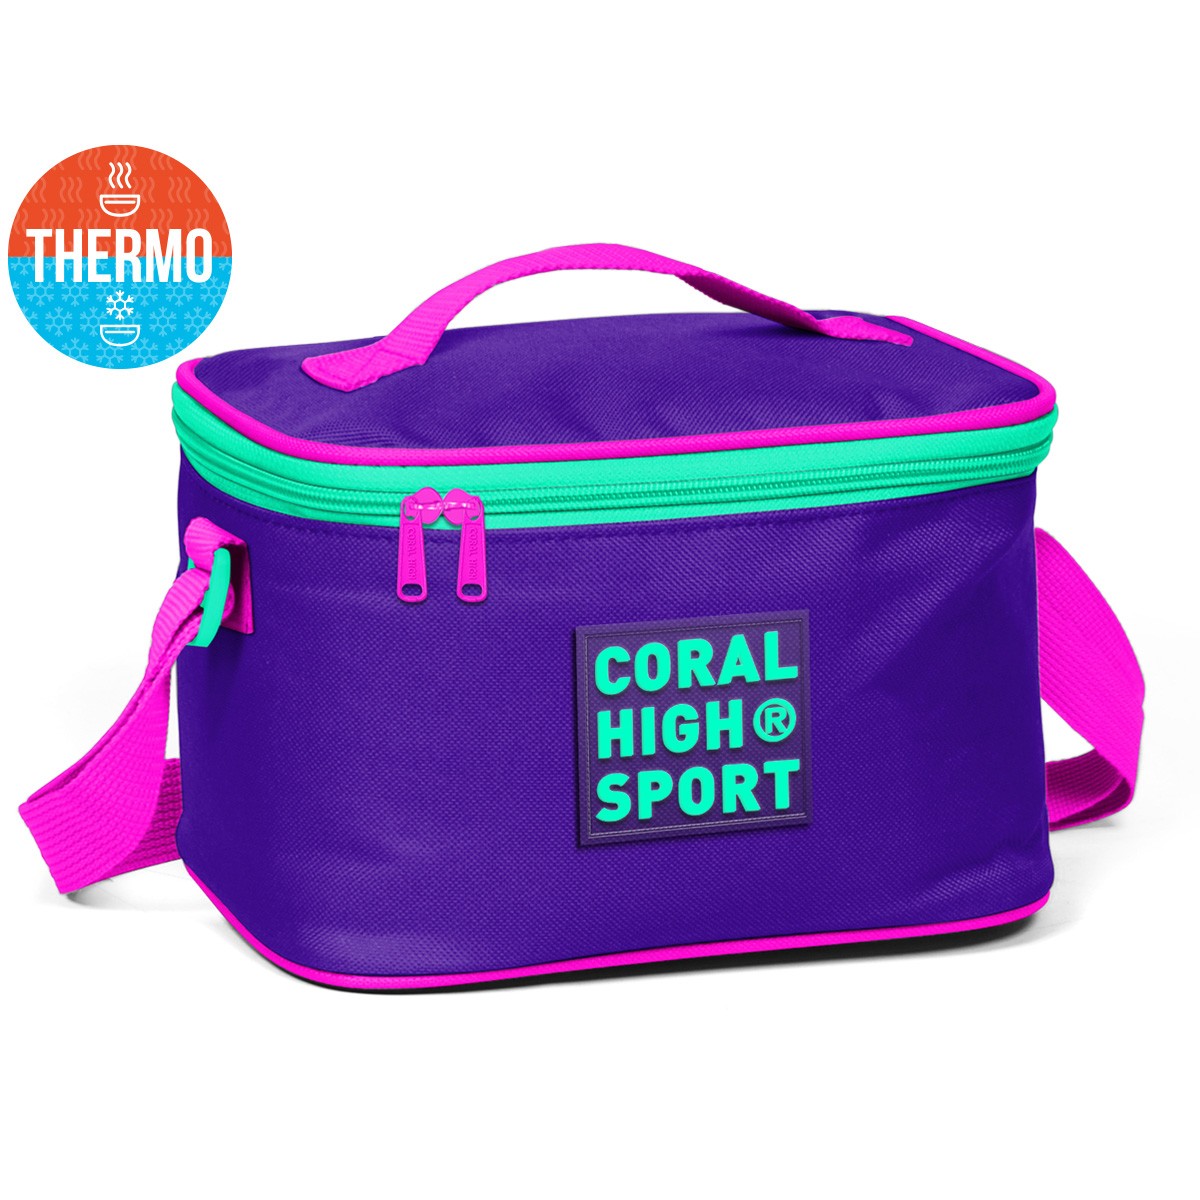 Coral High Sport Mor Pembe Thermo Beslenme Çantası 22816